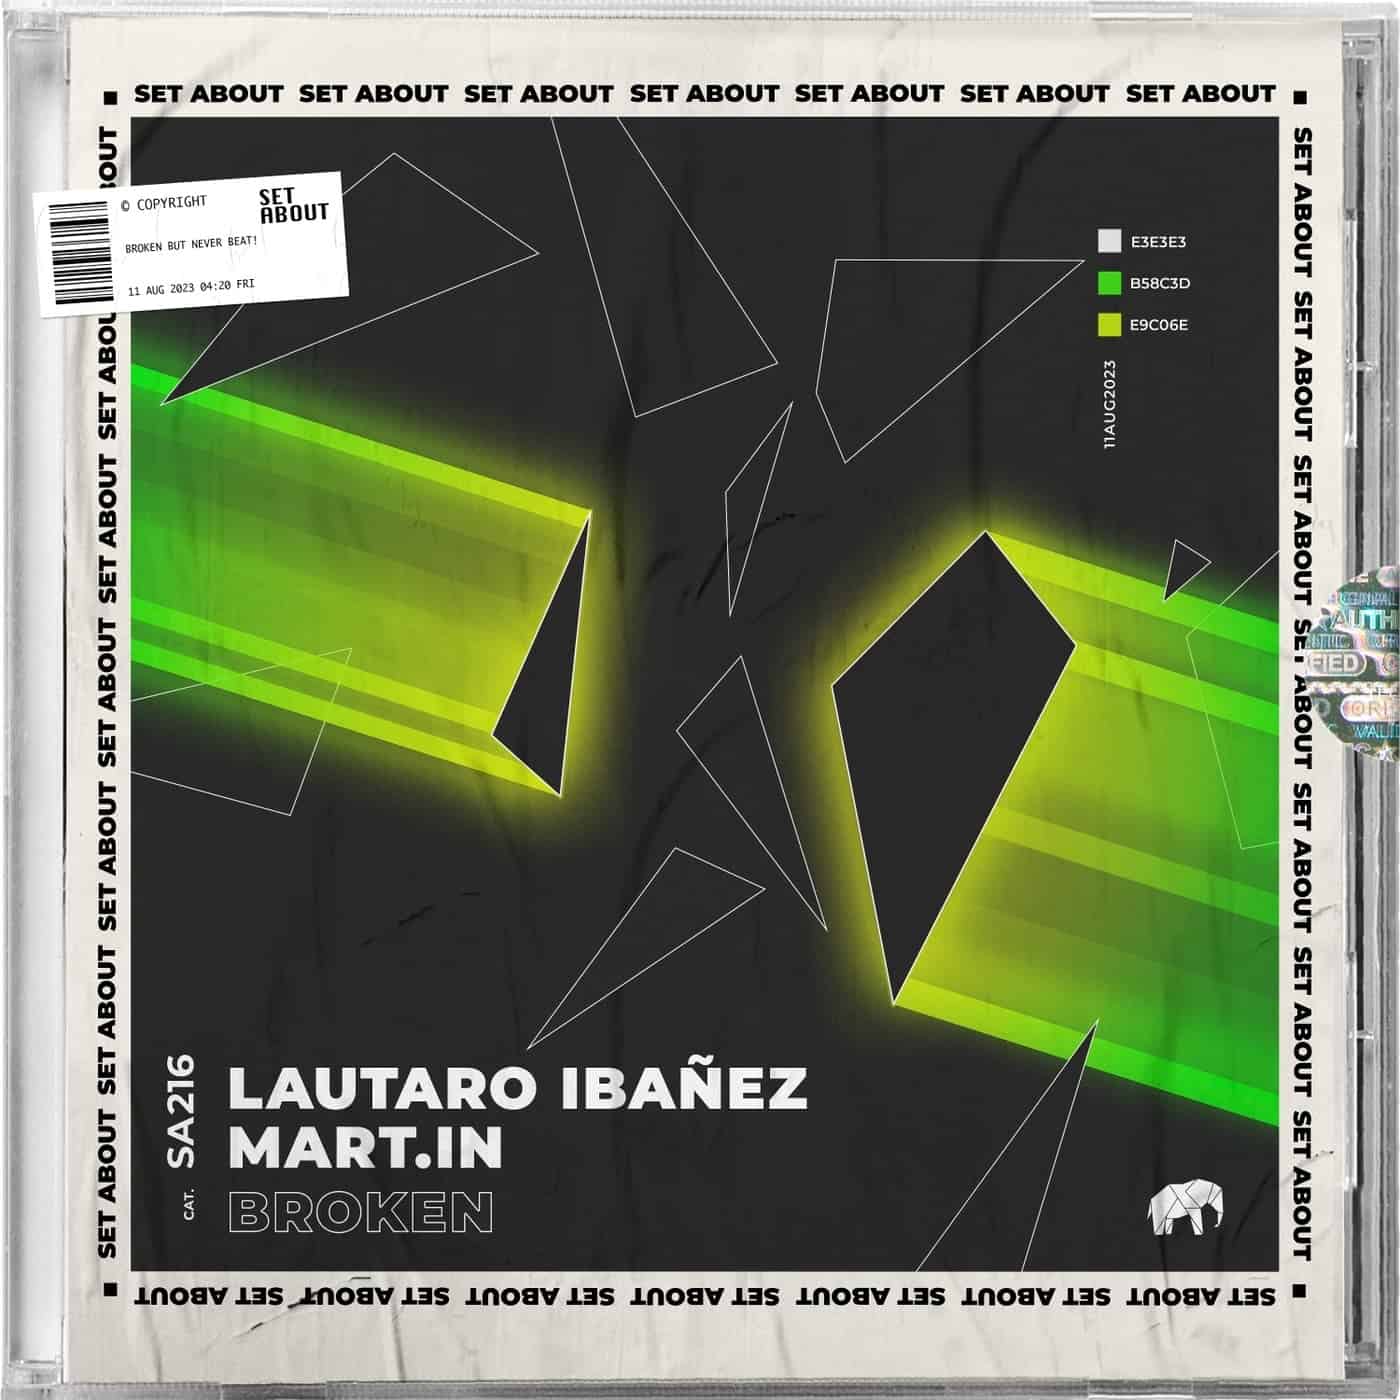 Release Cover: Lautaro Ibañez, Mart.in - Broken on Electrobuzz